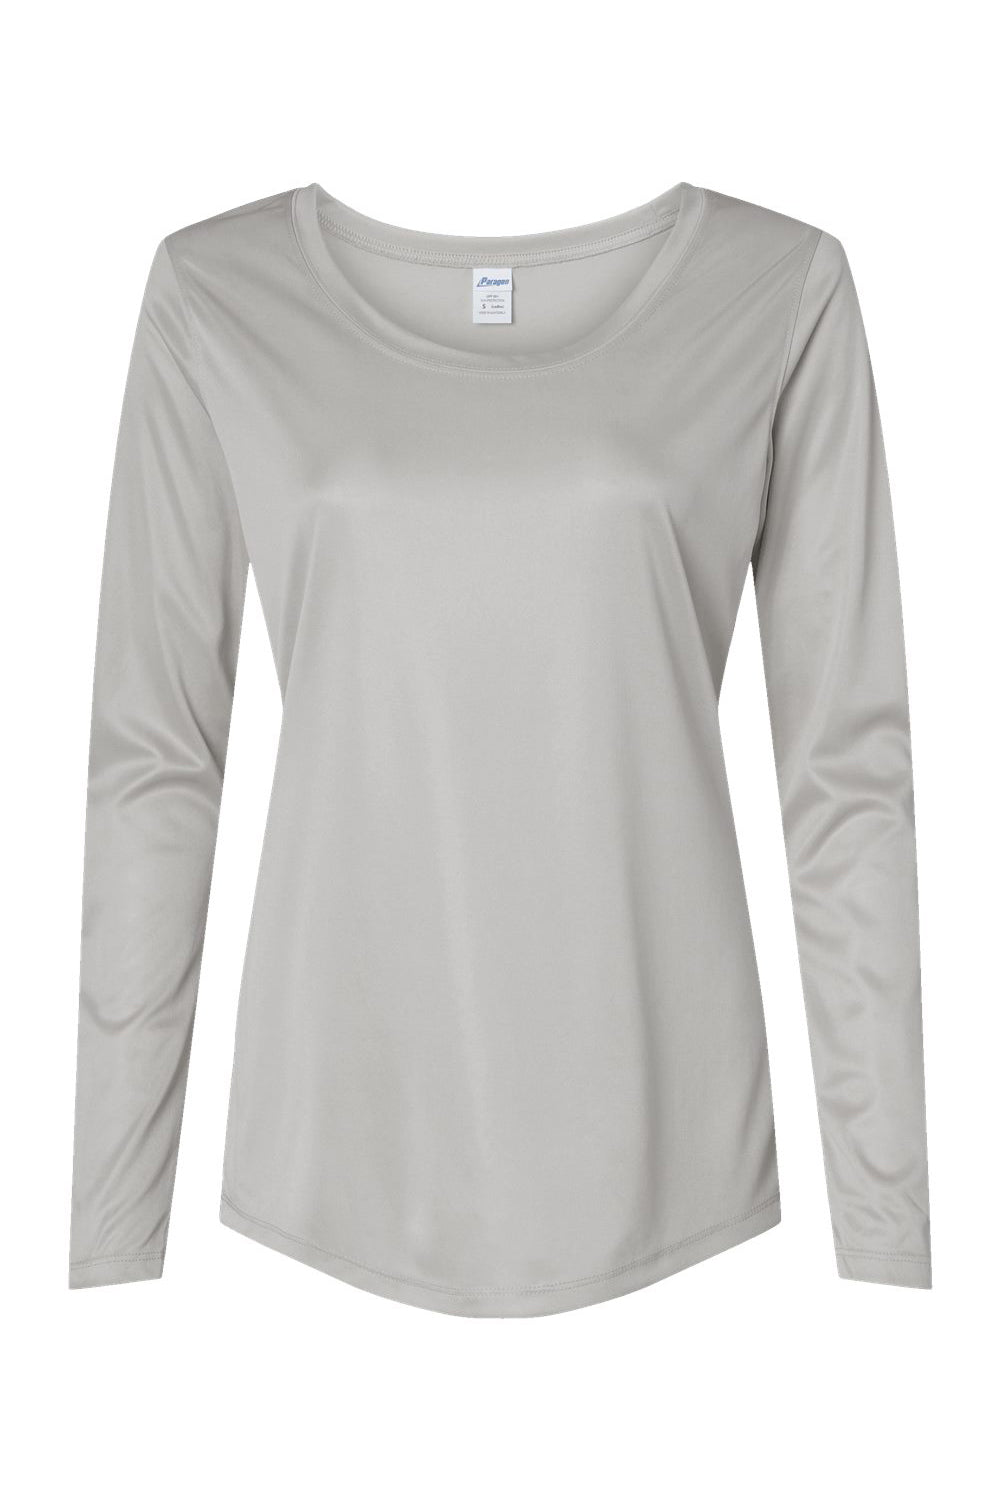 Paragon 214 Womens Islander Performance Long Sleeve Scoop Neck T-Shirt Aluminum Grey Flat Front